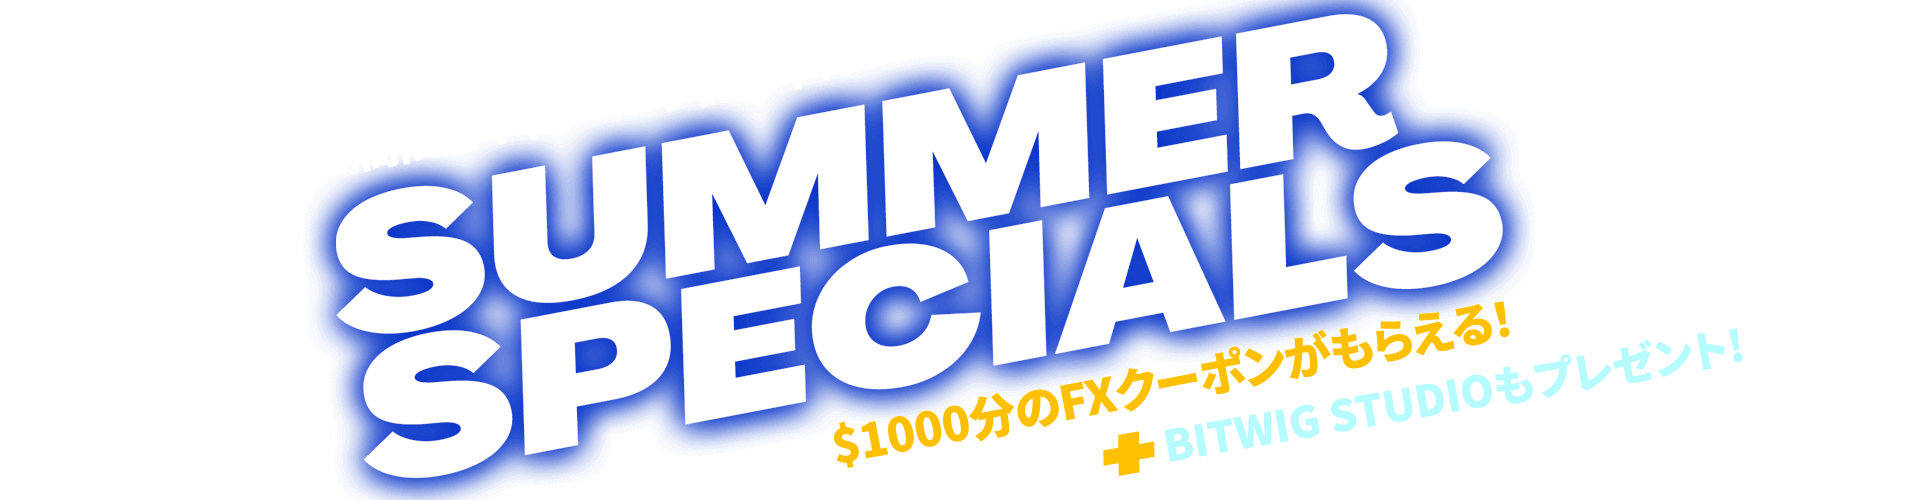 Summer special web header 1920x500px JP0202 n